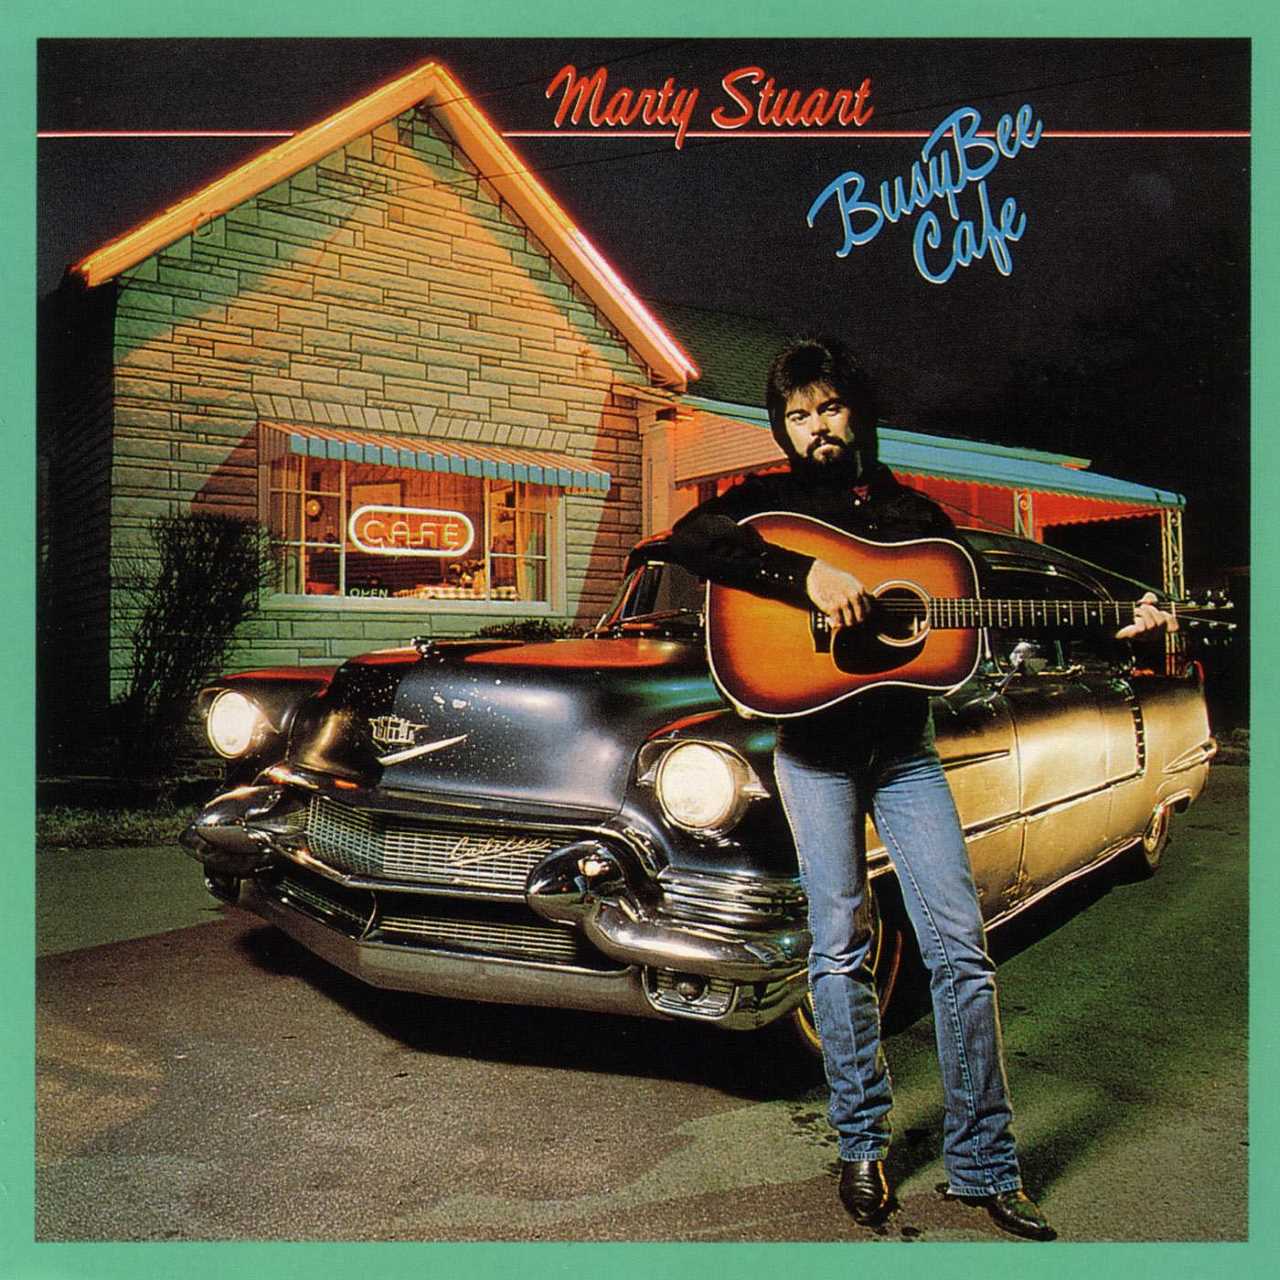 Marty Stuart - Busy Bee Cafè cover album